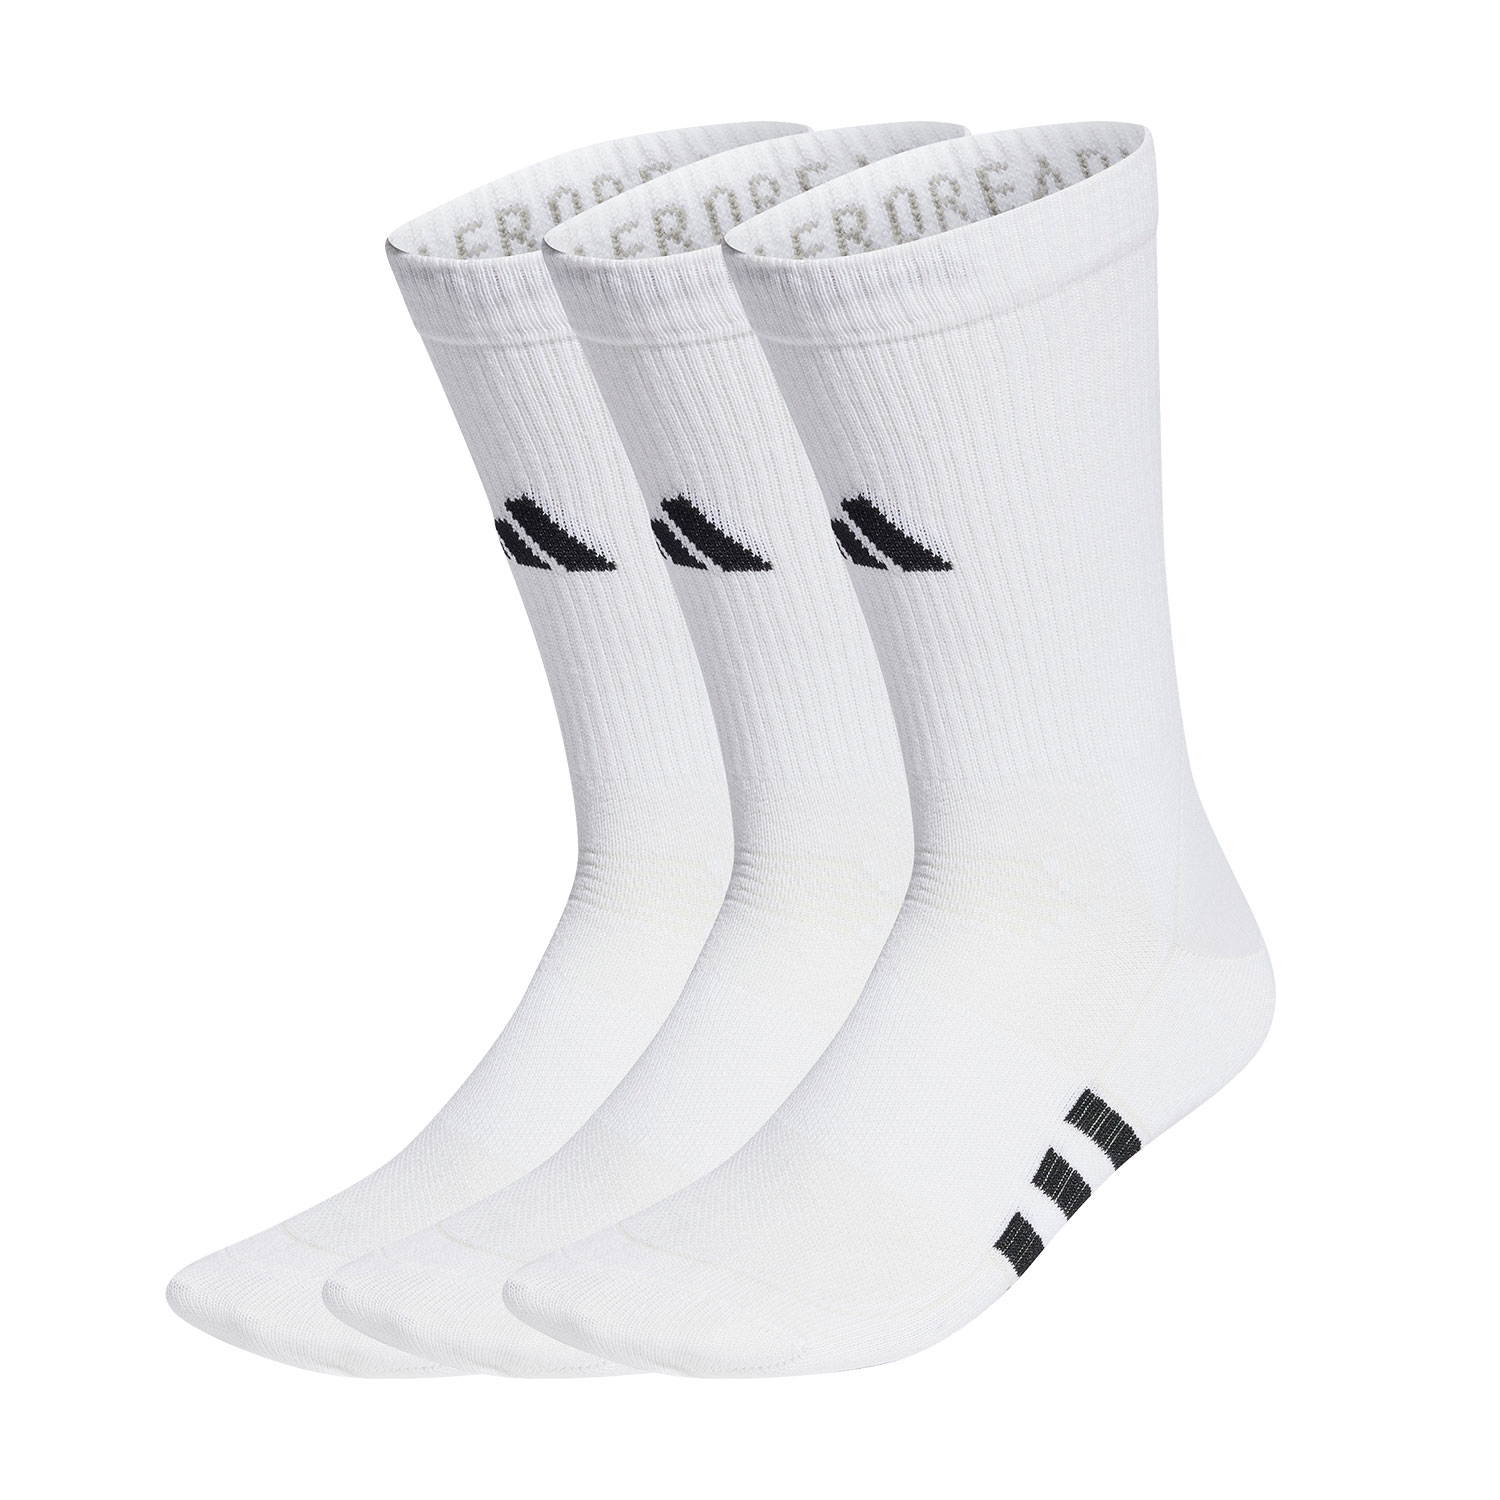 adidas Performance Light Crew x 3 Running Socks - White